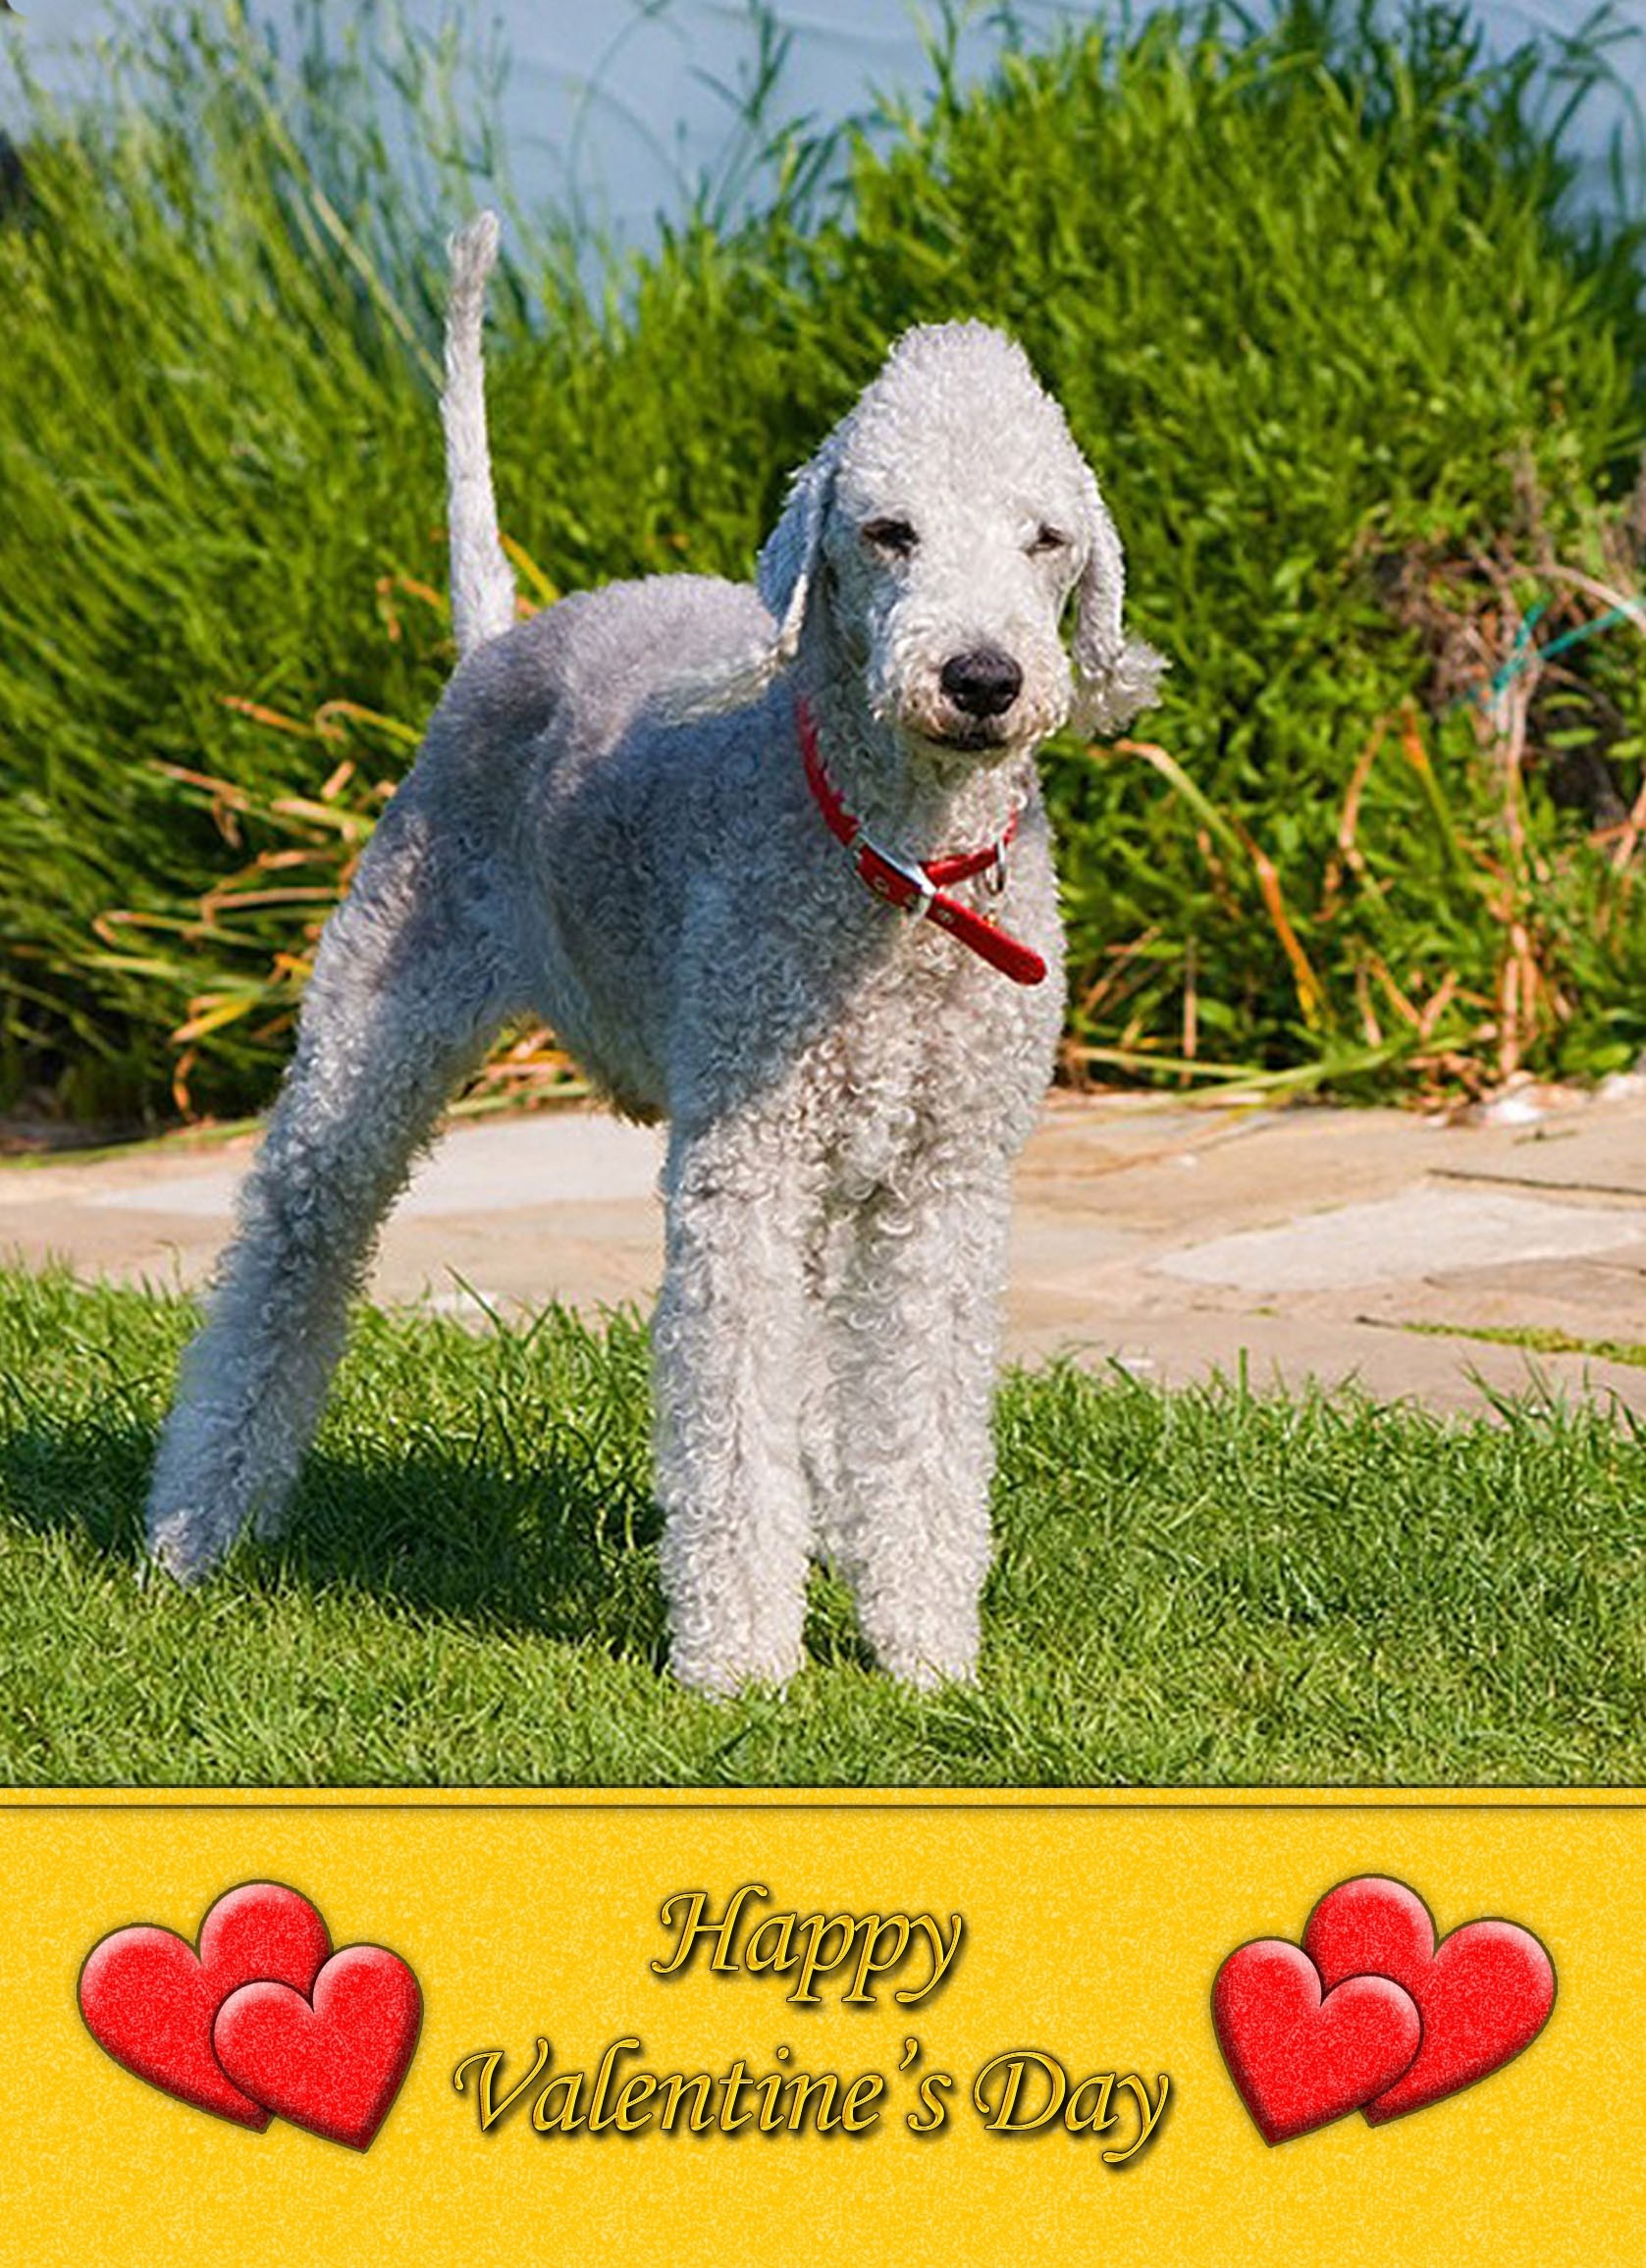 Bedlington Terrier Valentine's Day Card